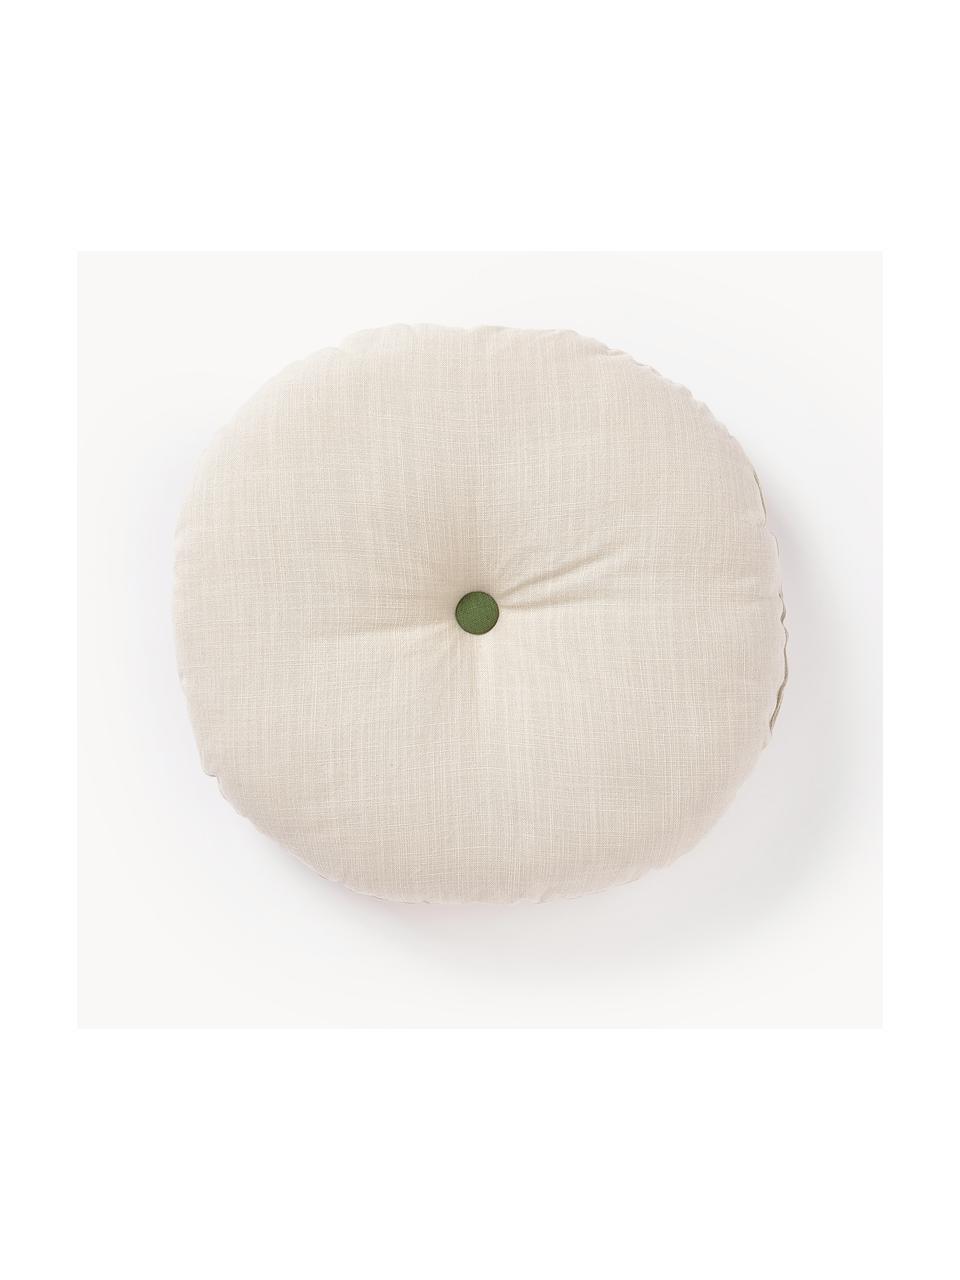 Cojín decorativo redondo Devi, con relleno, Funda: 100% algodón, Beige claro, Ø 35 cm